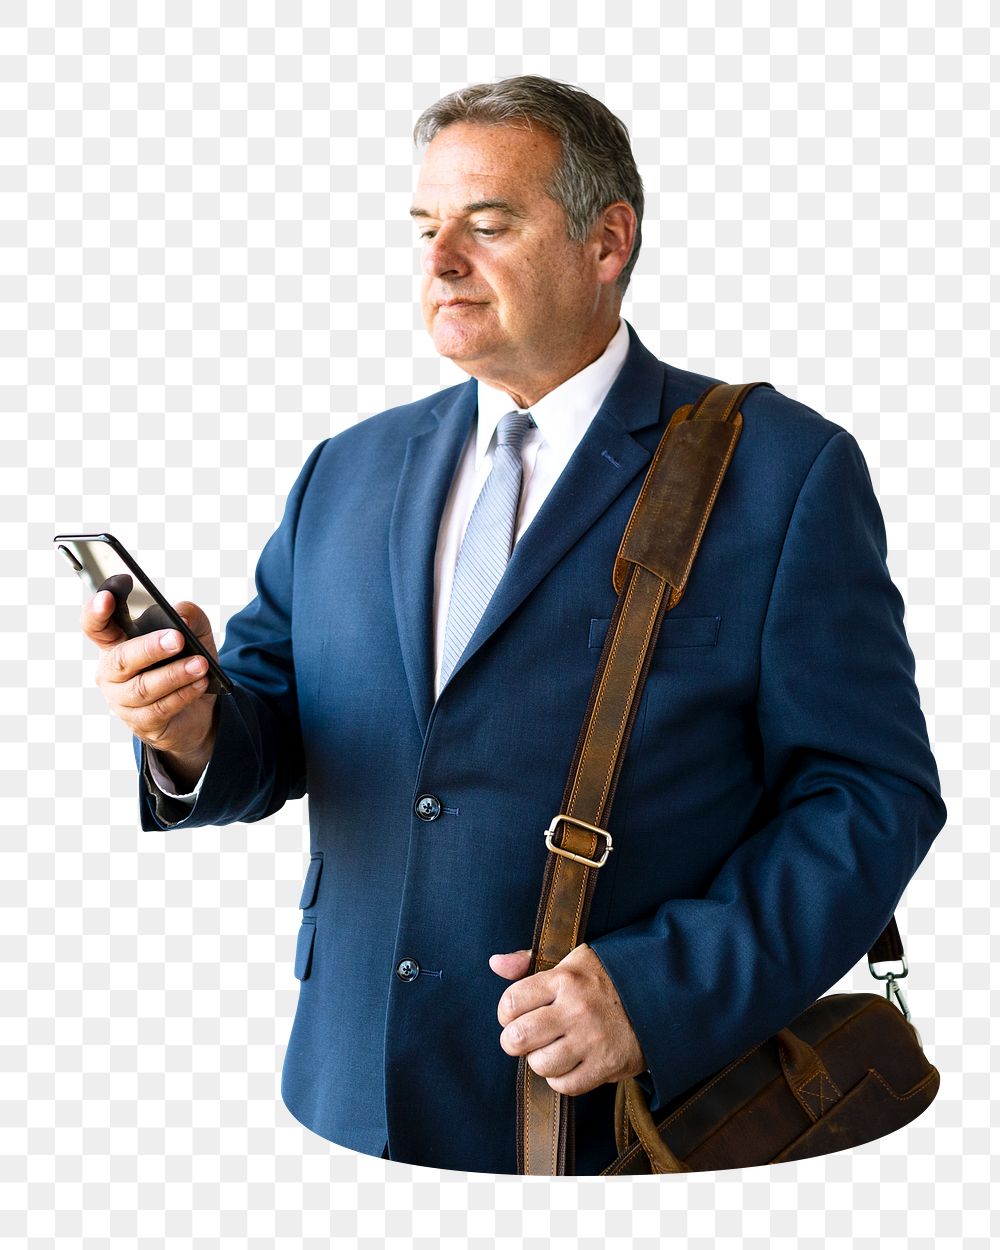 Businessman checking phone png sticker, transparent background